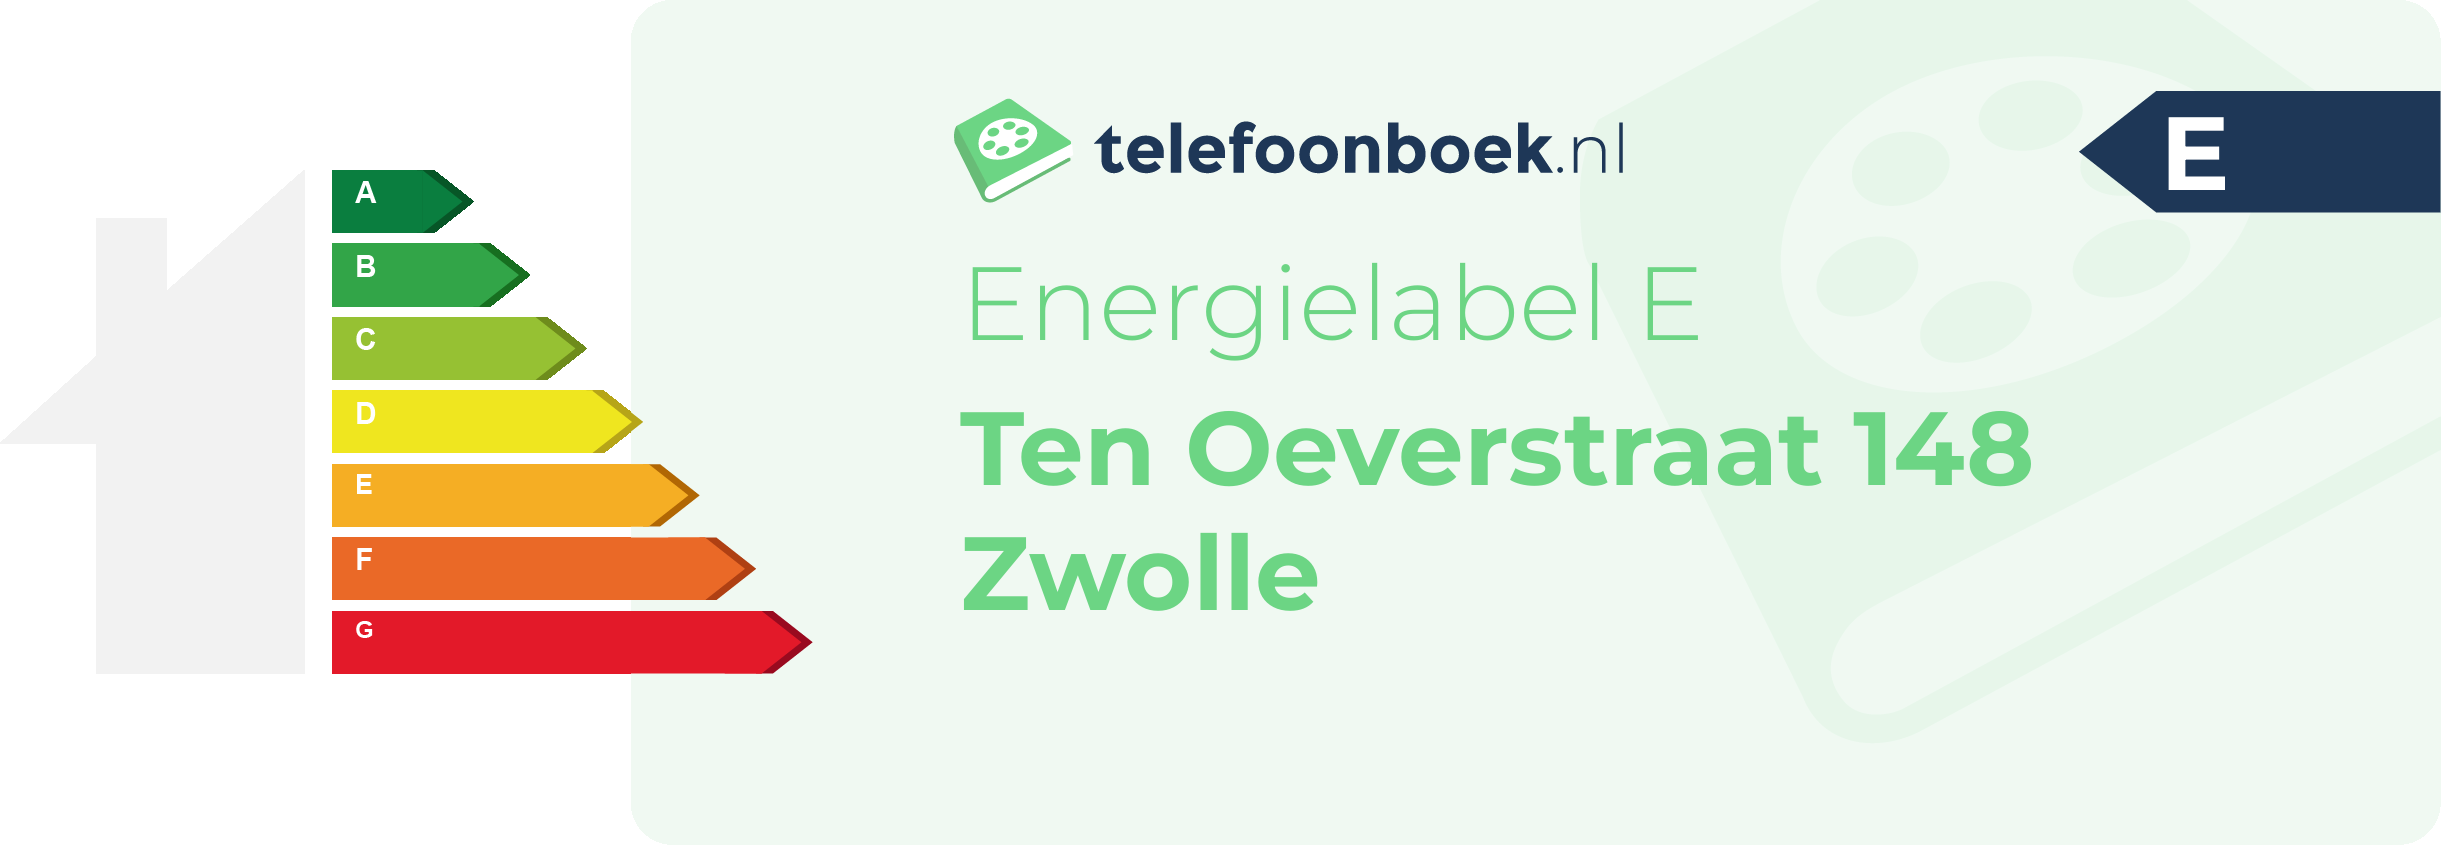 Energielabel Ten Oeverstraat 148 Zwolle